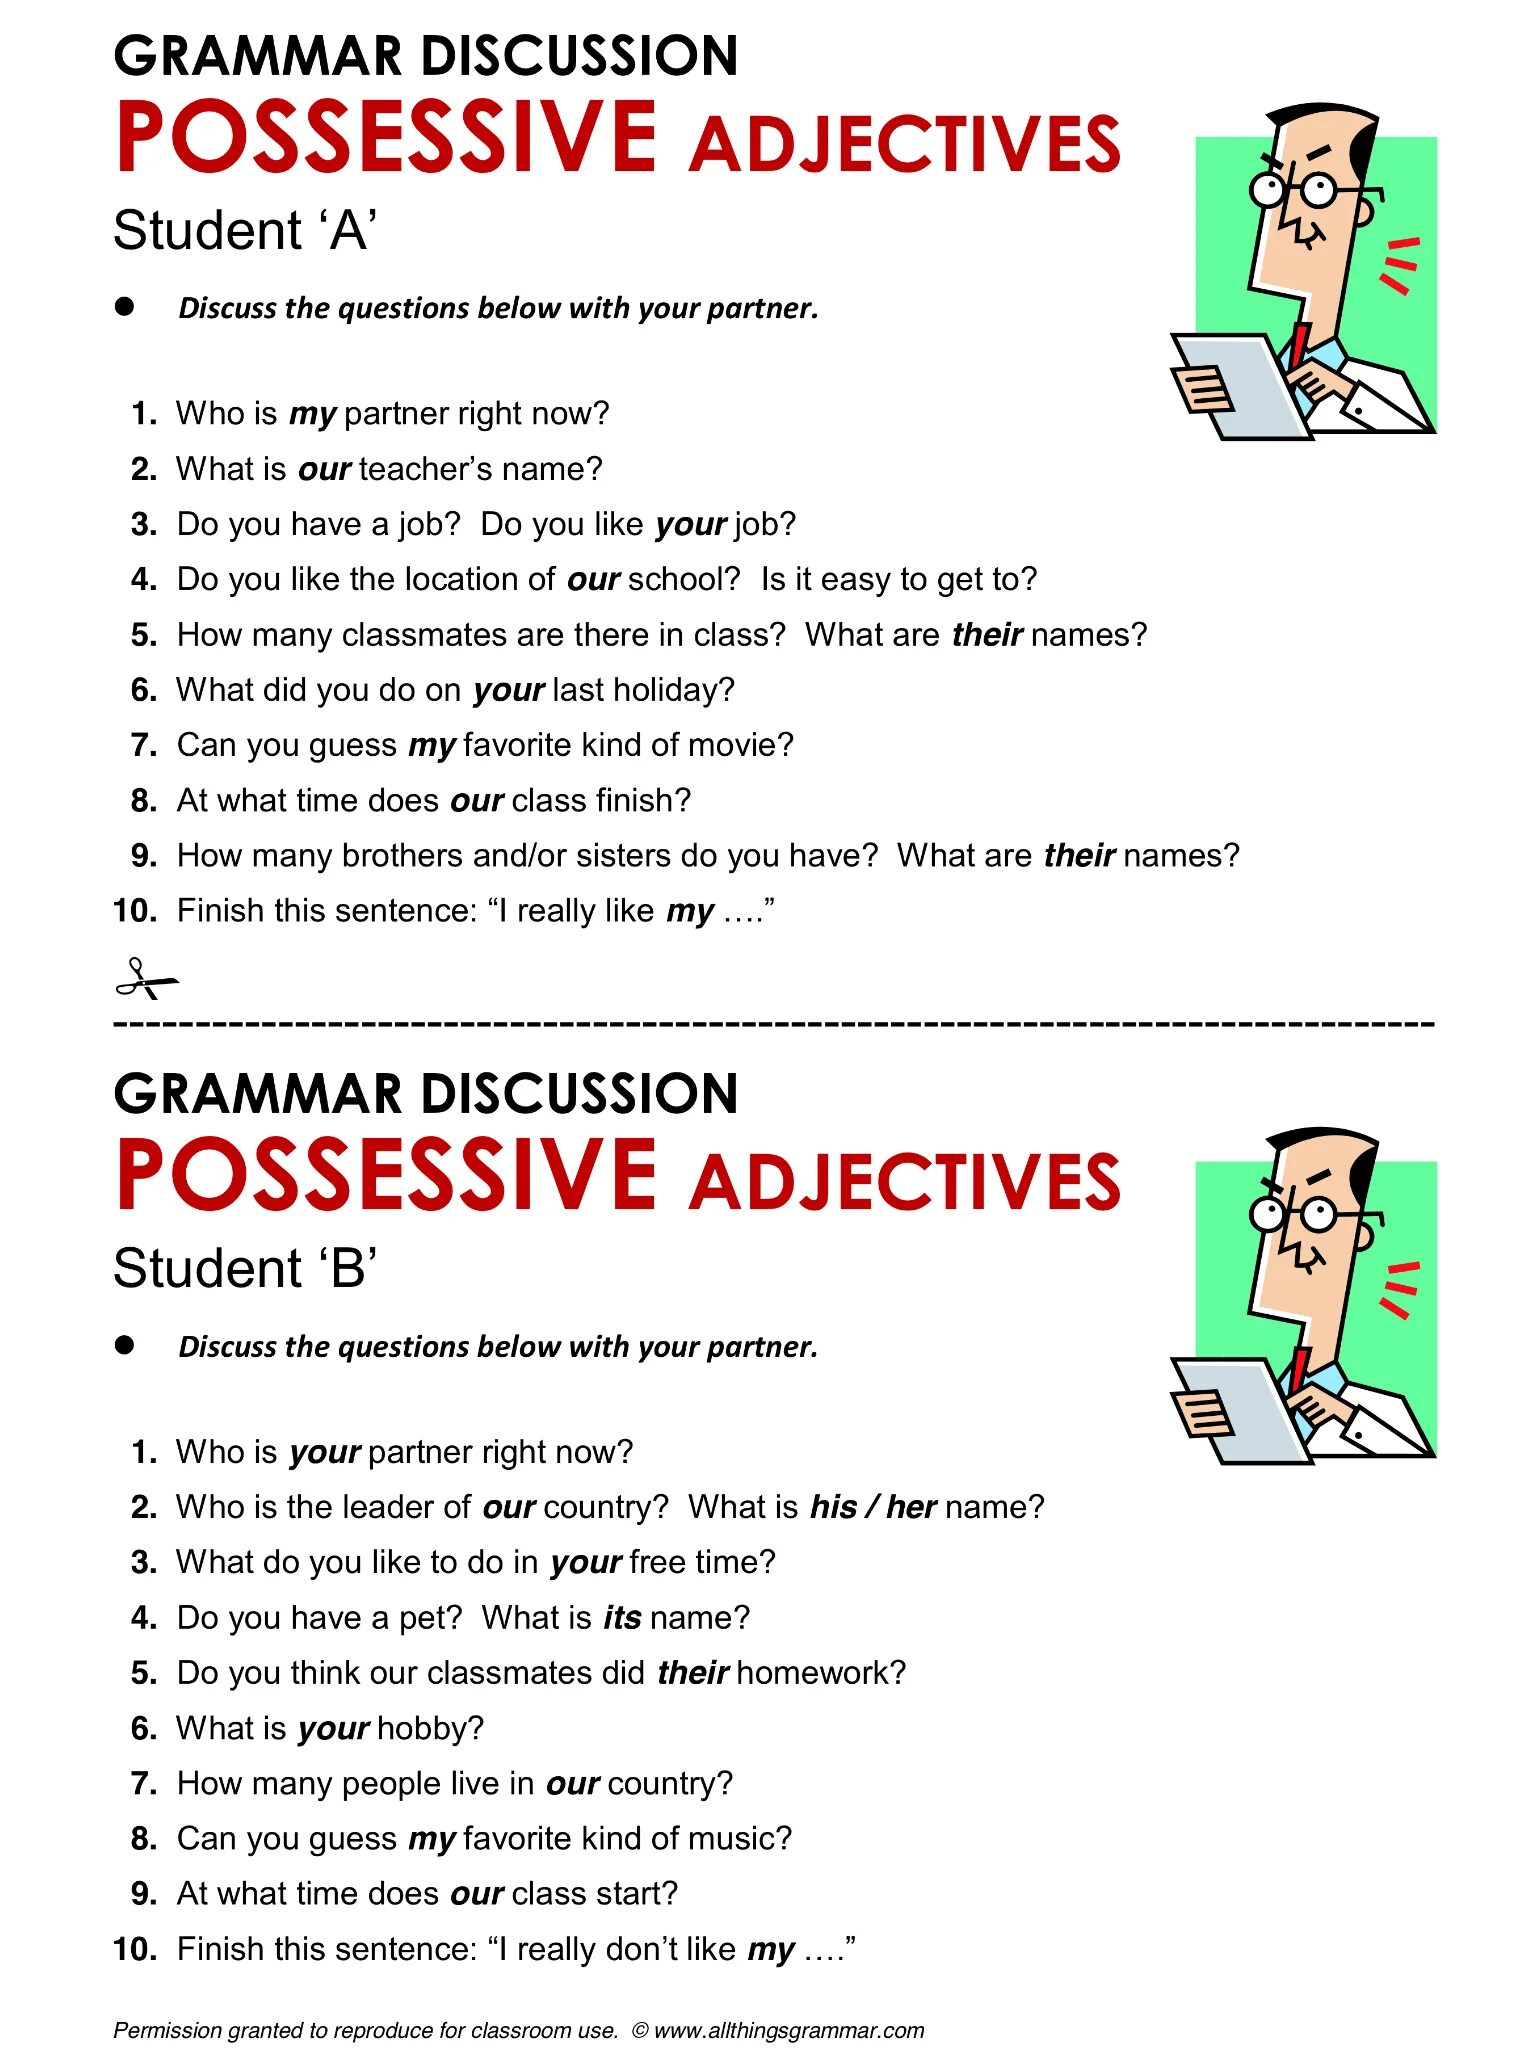 How many brothers. Possessive pronouns speaking activities. Possessive adjectives. Possessive adjectives карточки. Grammar possessive adjectives.